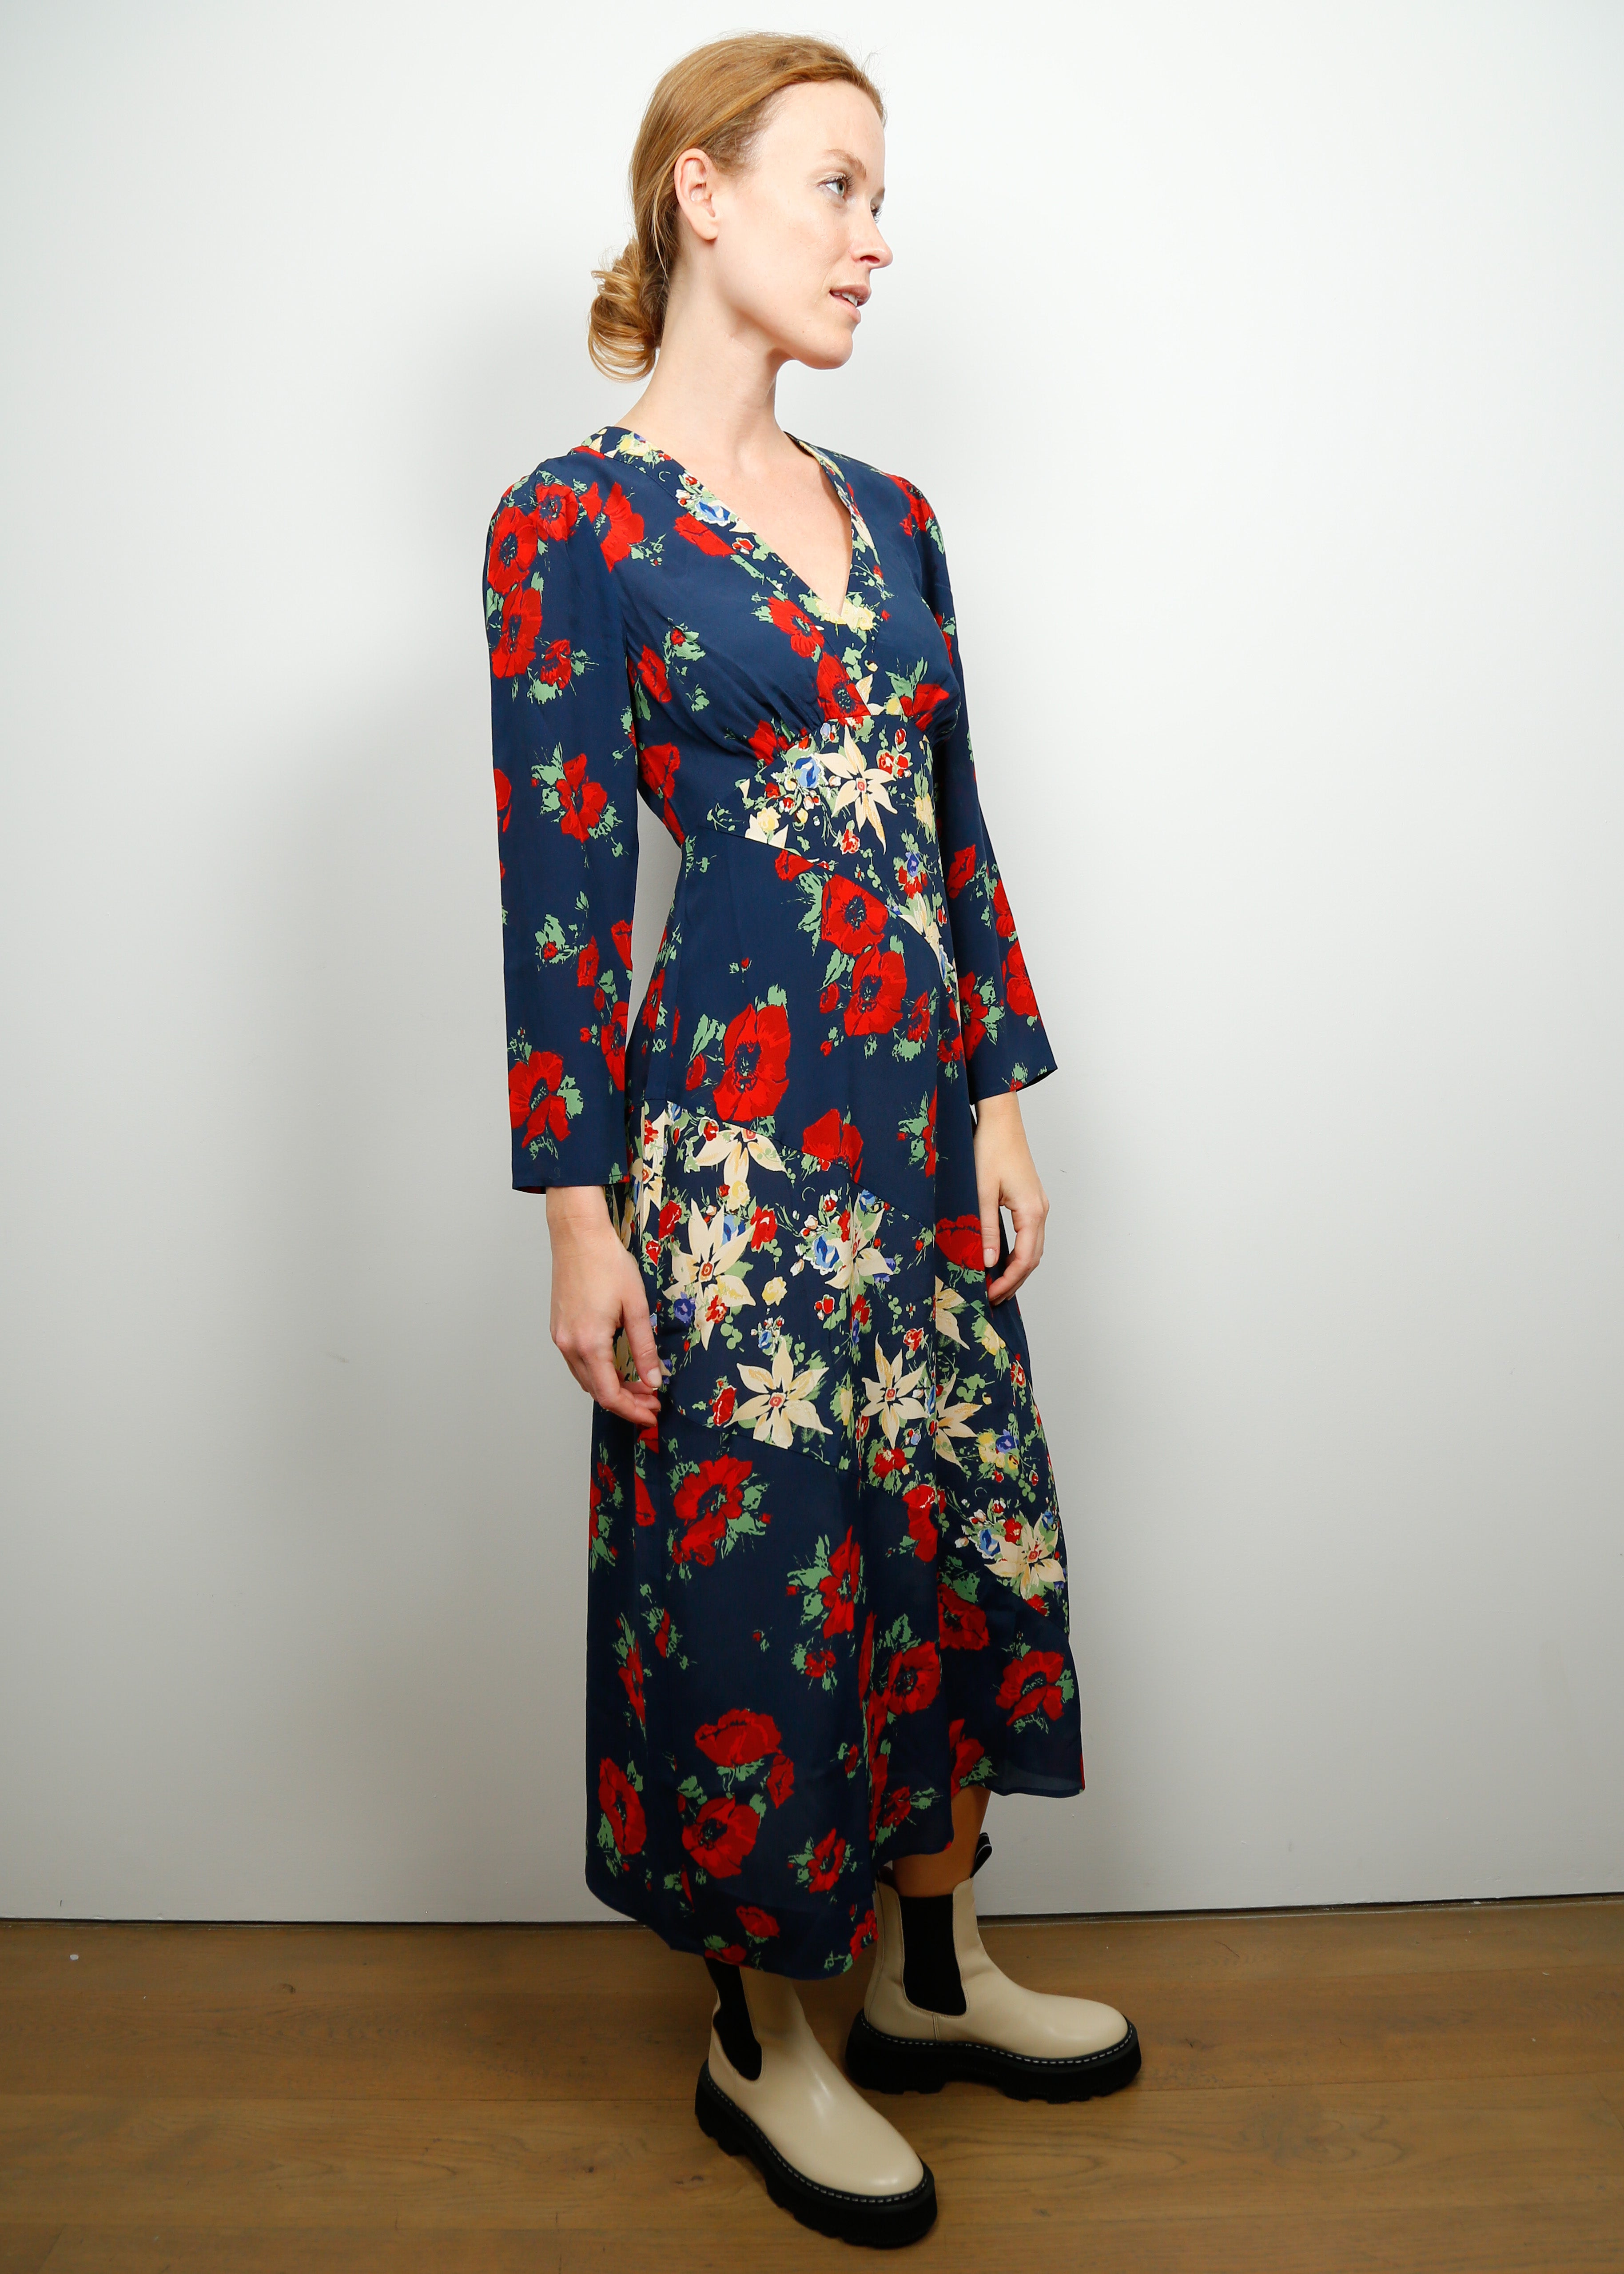 RIXO Hepburn Dress in Navy Star Floral Mix